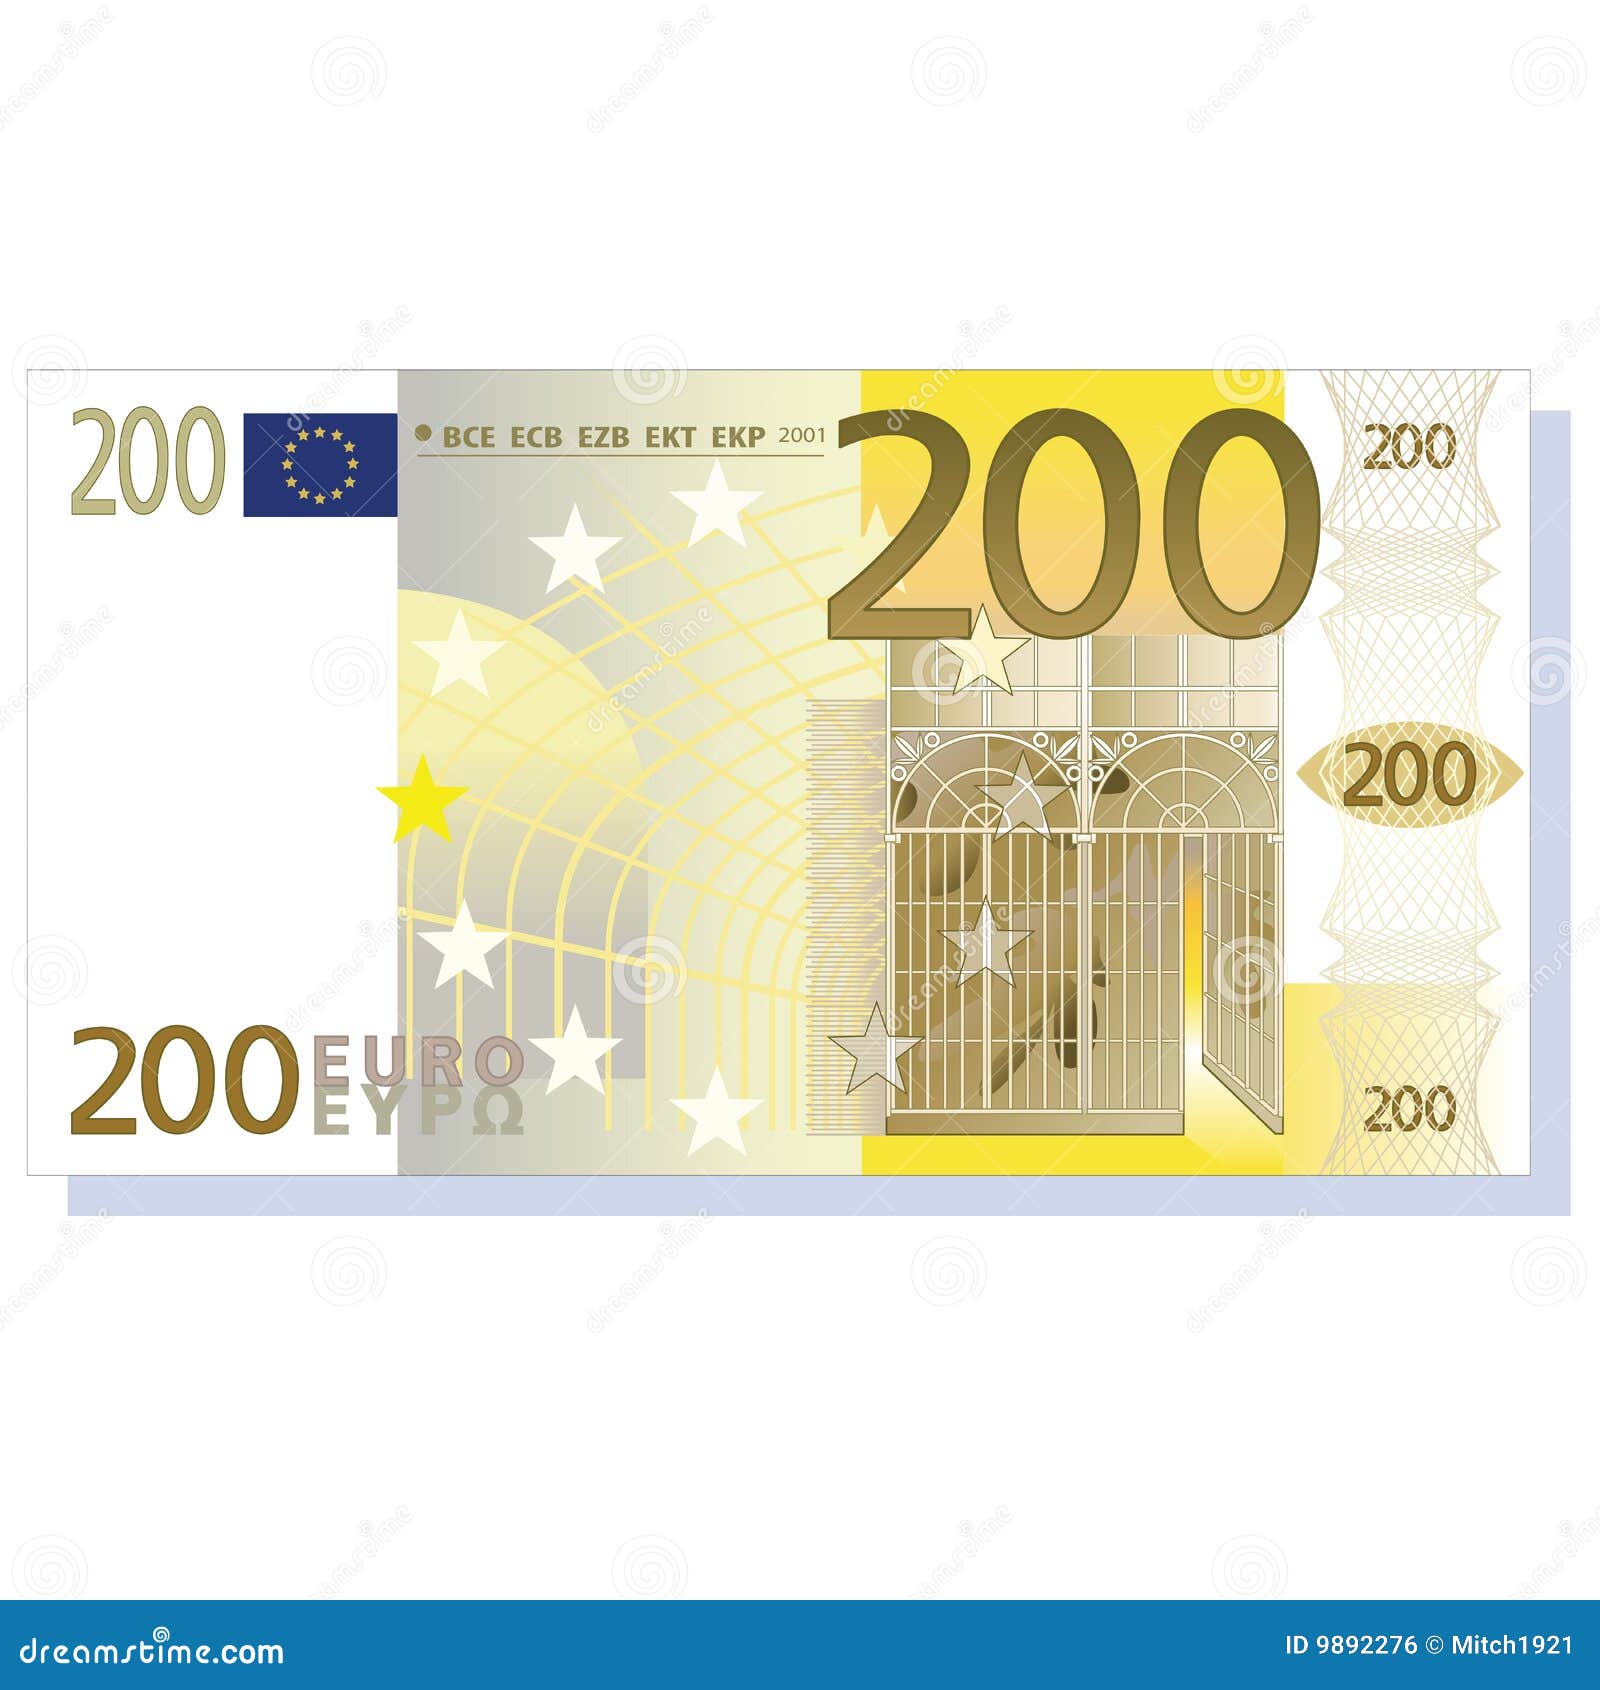 euro banknote